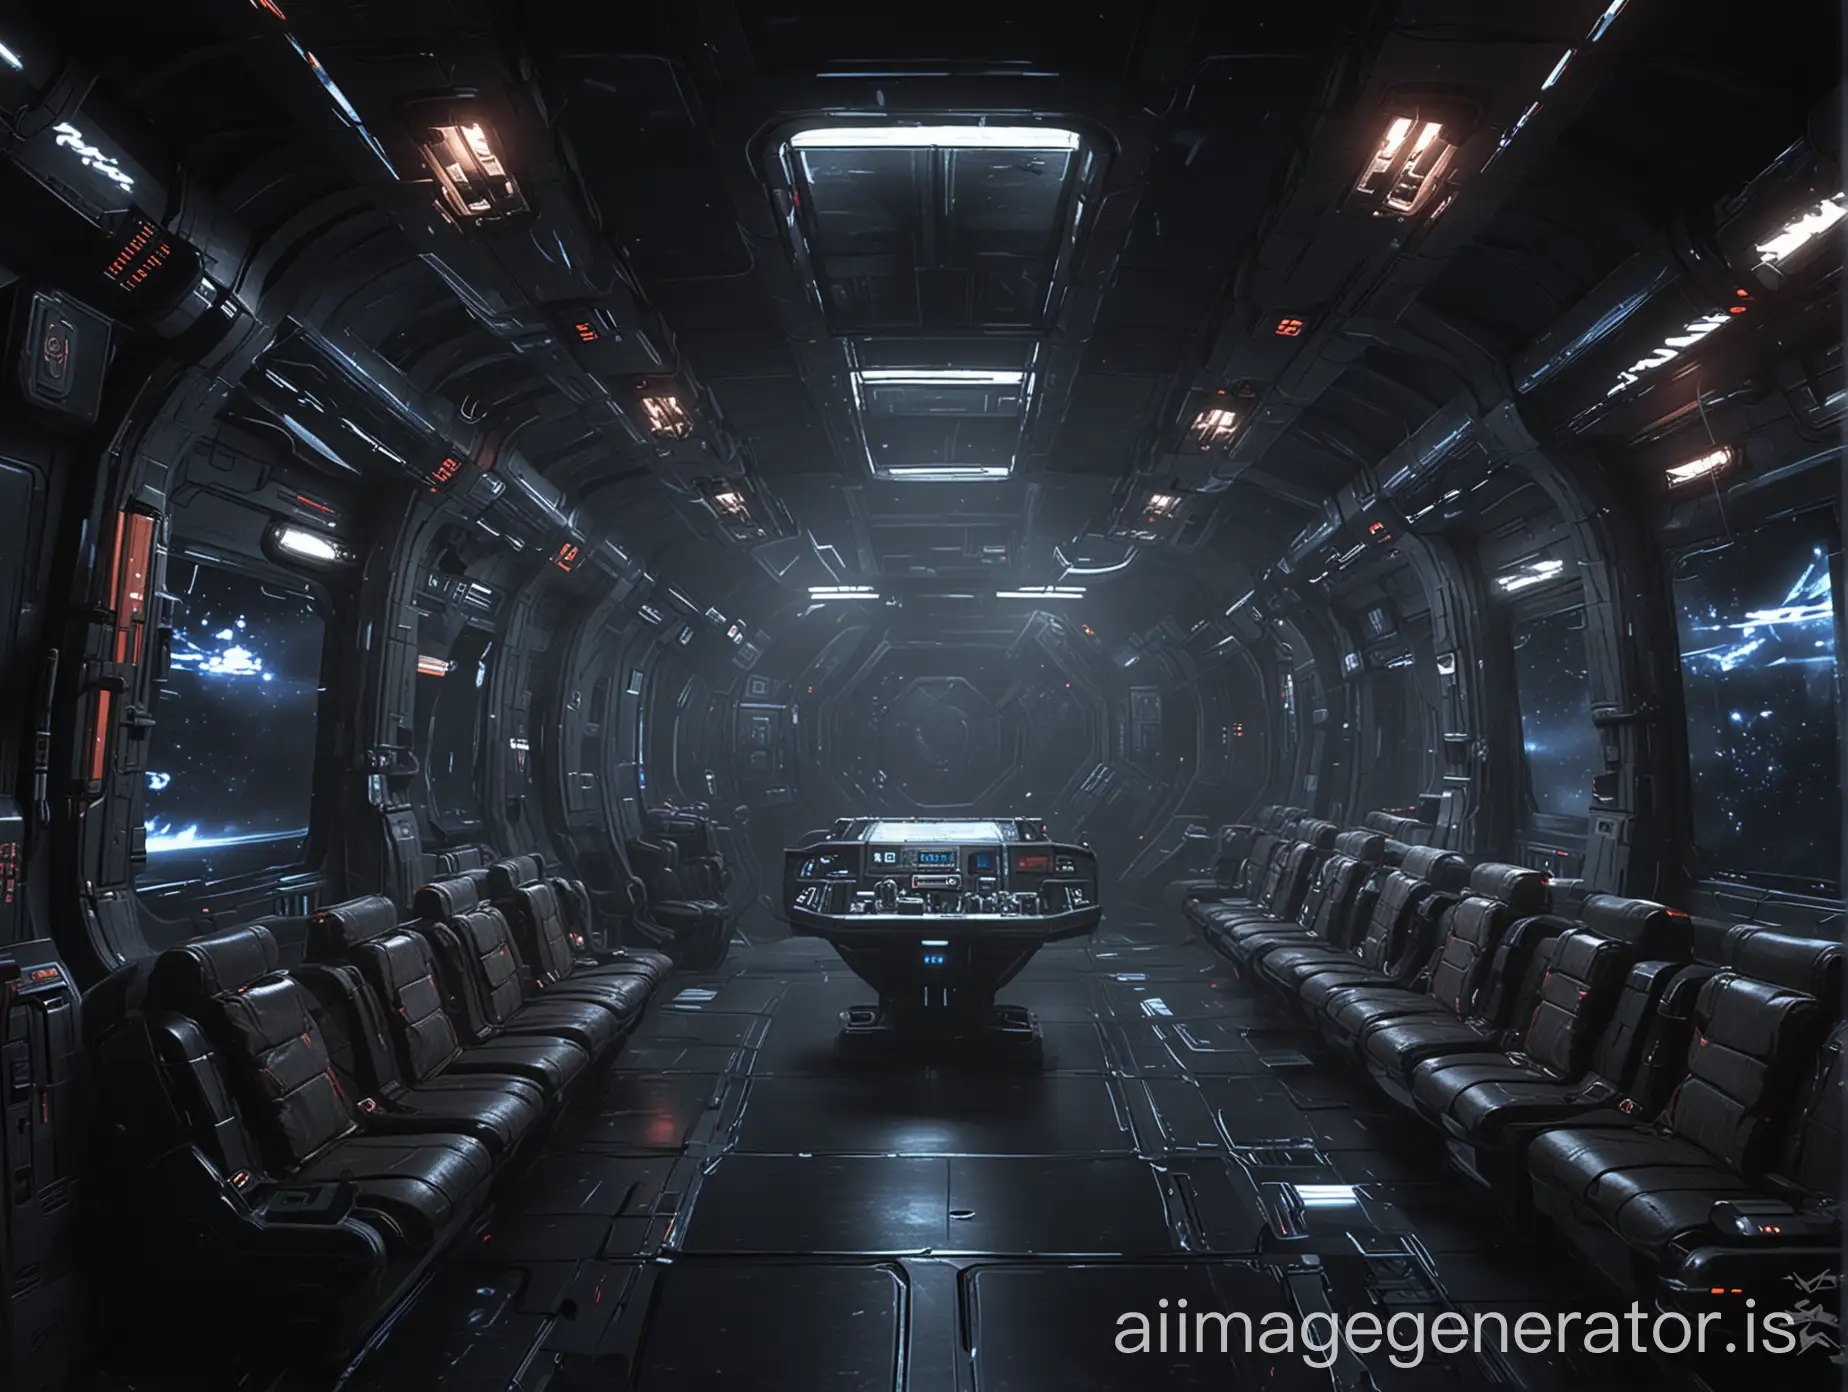 Futuristic-Spaceship-Interior-in-Dark-Matter-and-Mass-Effect-Style